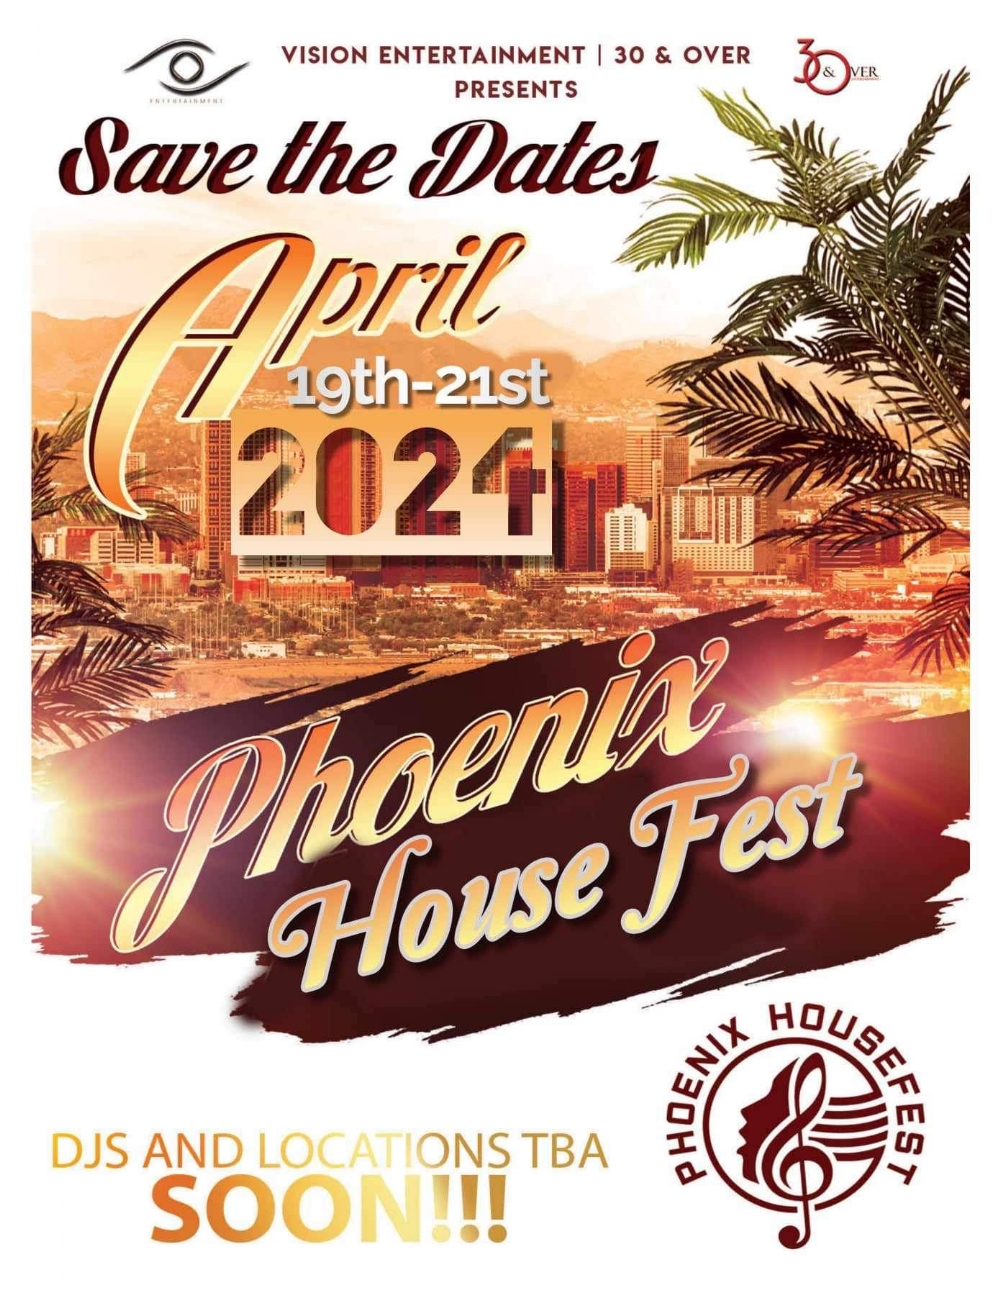 Phoenix Housefest!